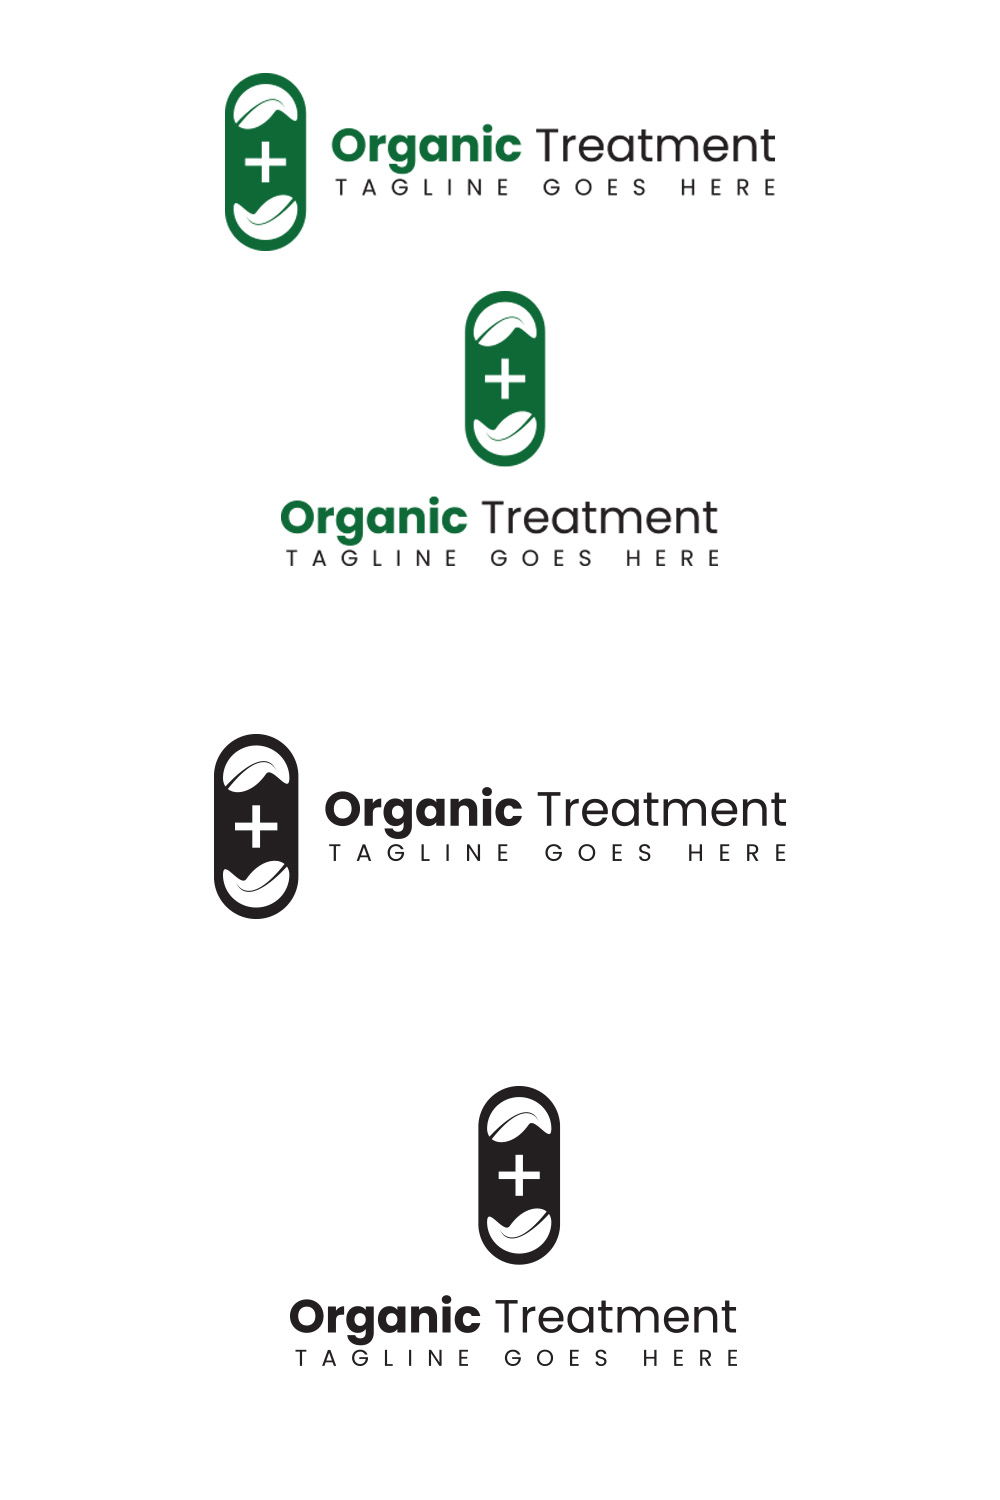 Organic Treatment Logo pinterest preview image.